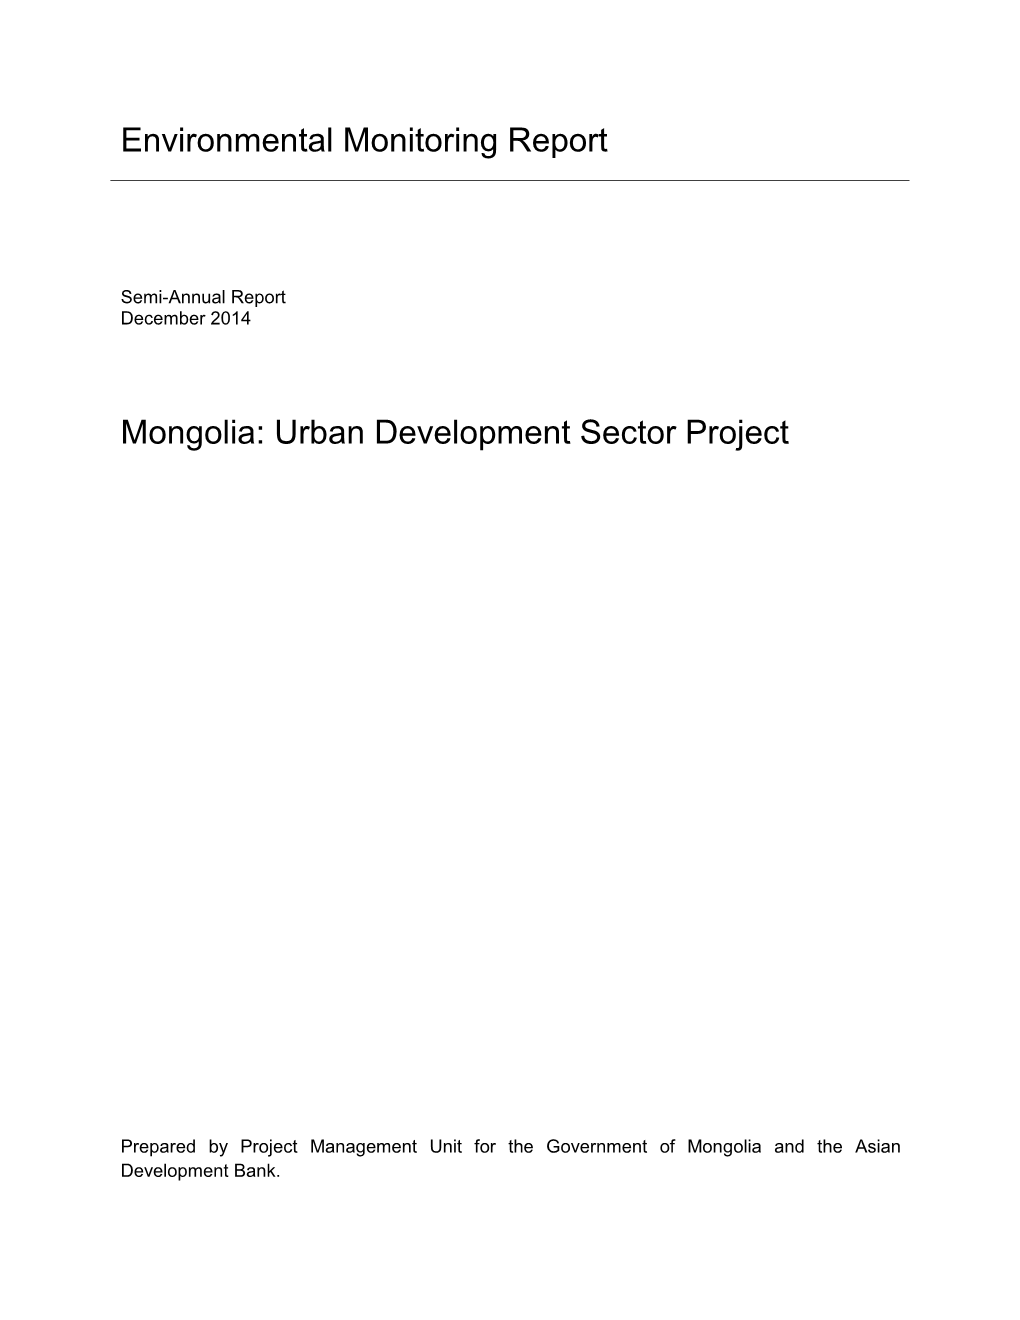 Environmental Monitoring Report Mongolia: Urban Development